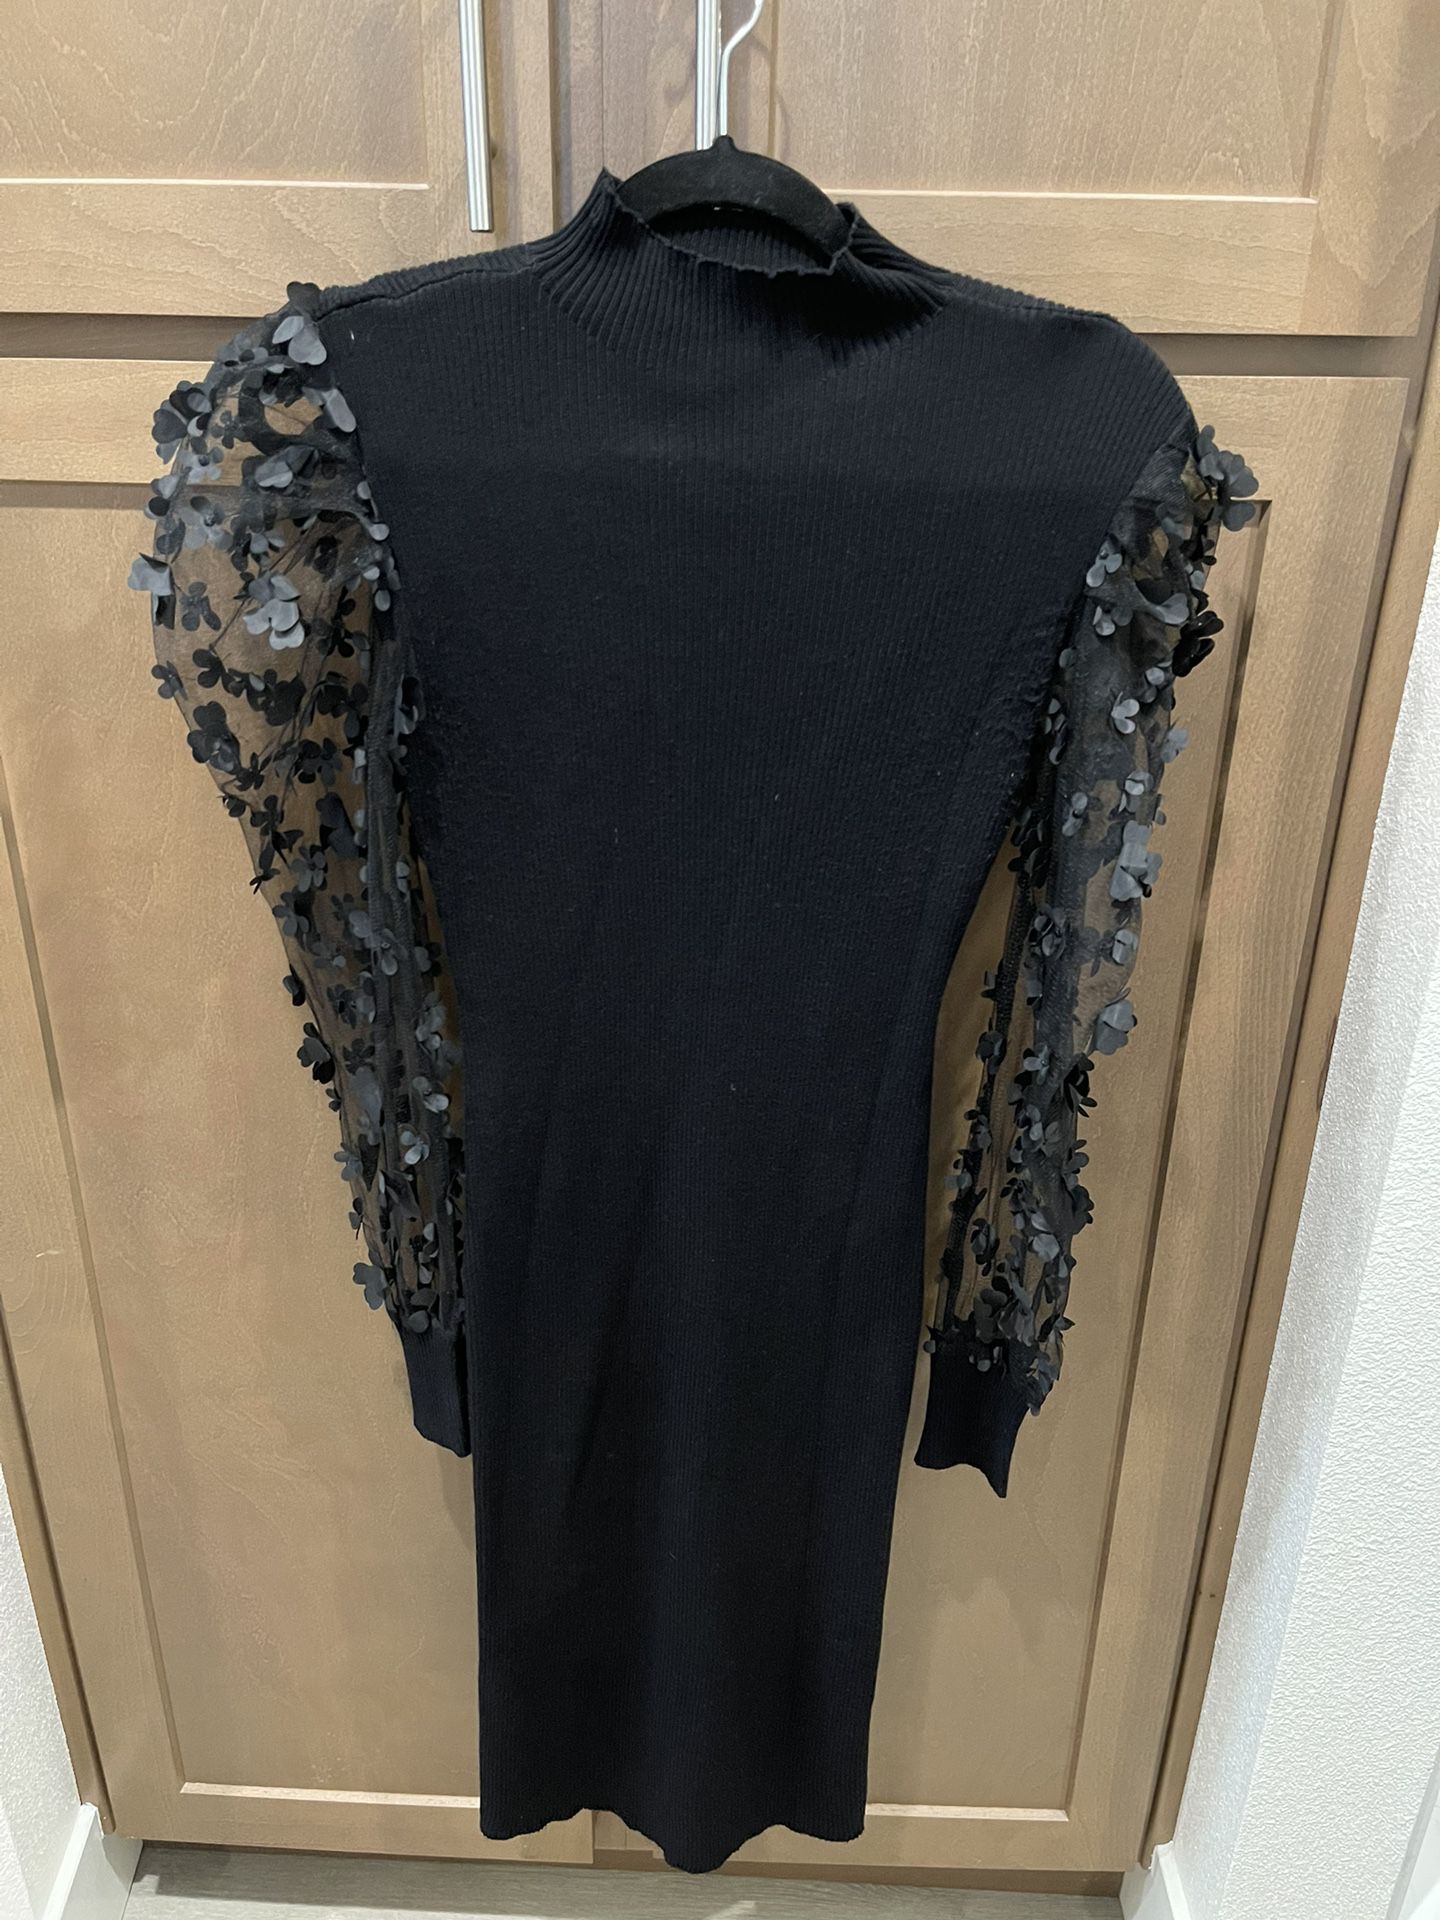 Black Dress Size Large $4